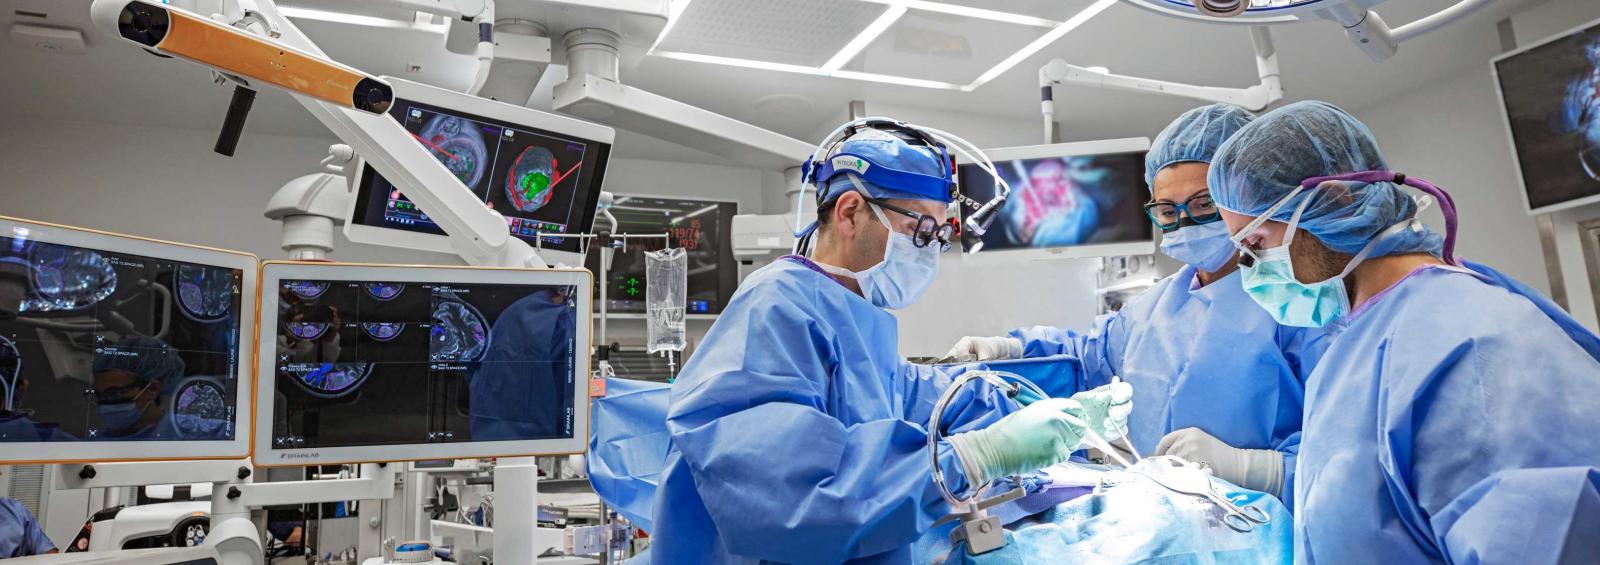 Surgical Technology Program | NYU School of Medicine | NYU Langone Health